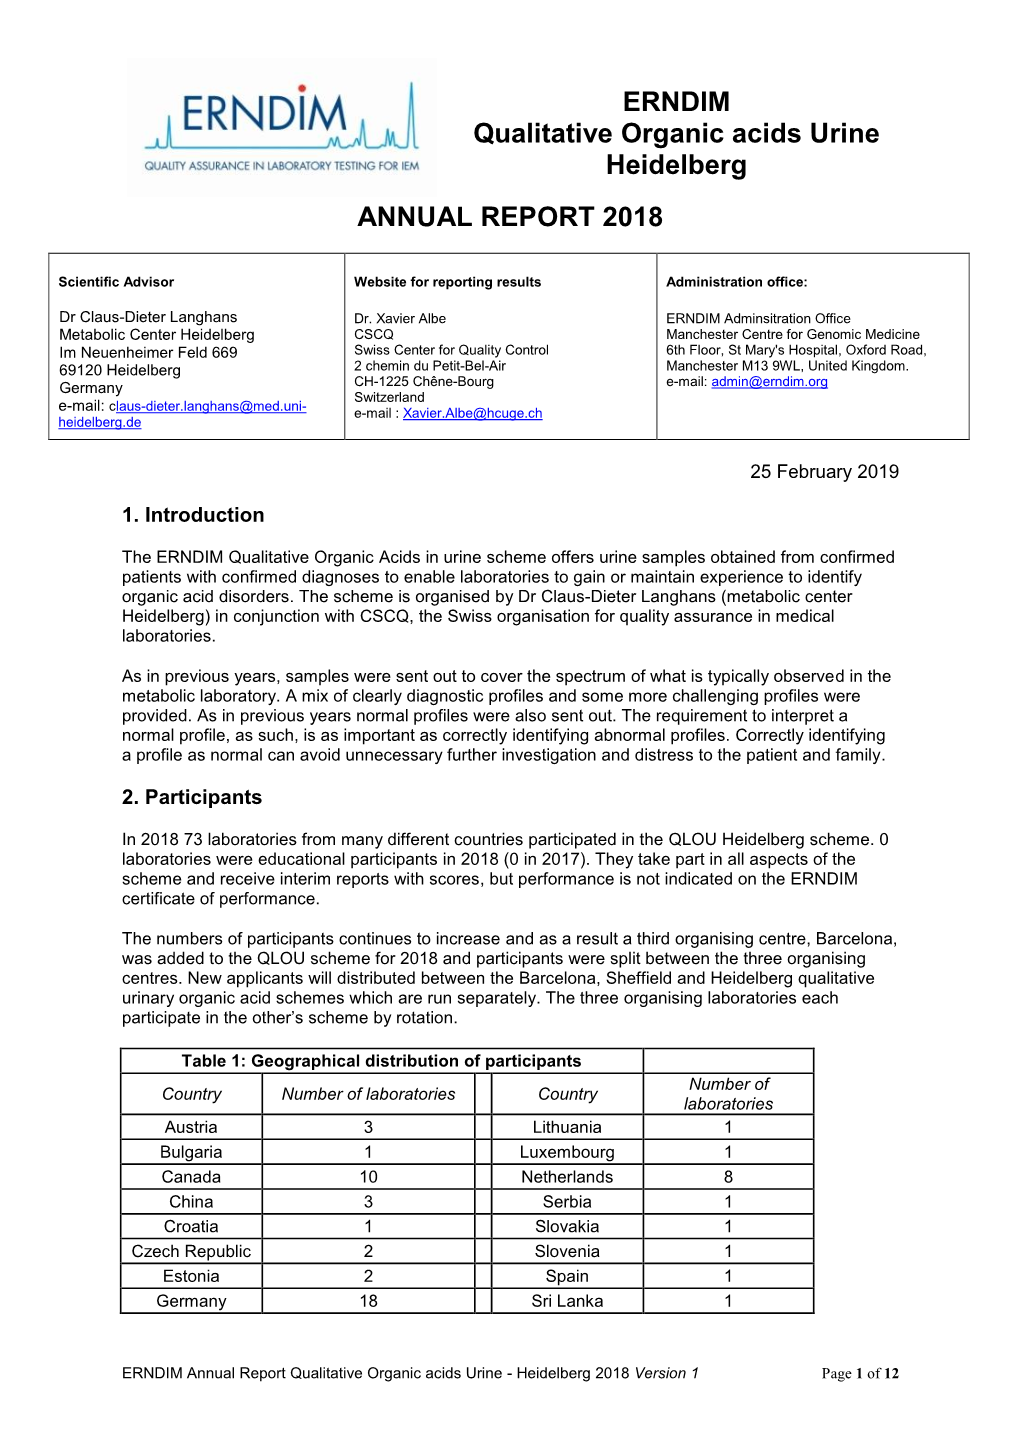 ERNDIM Qualitative Organic Acids Urine Heidelberg ANNUAL REPORT 2018